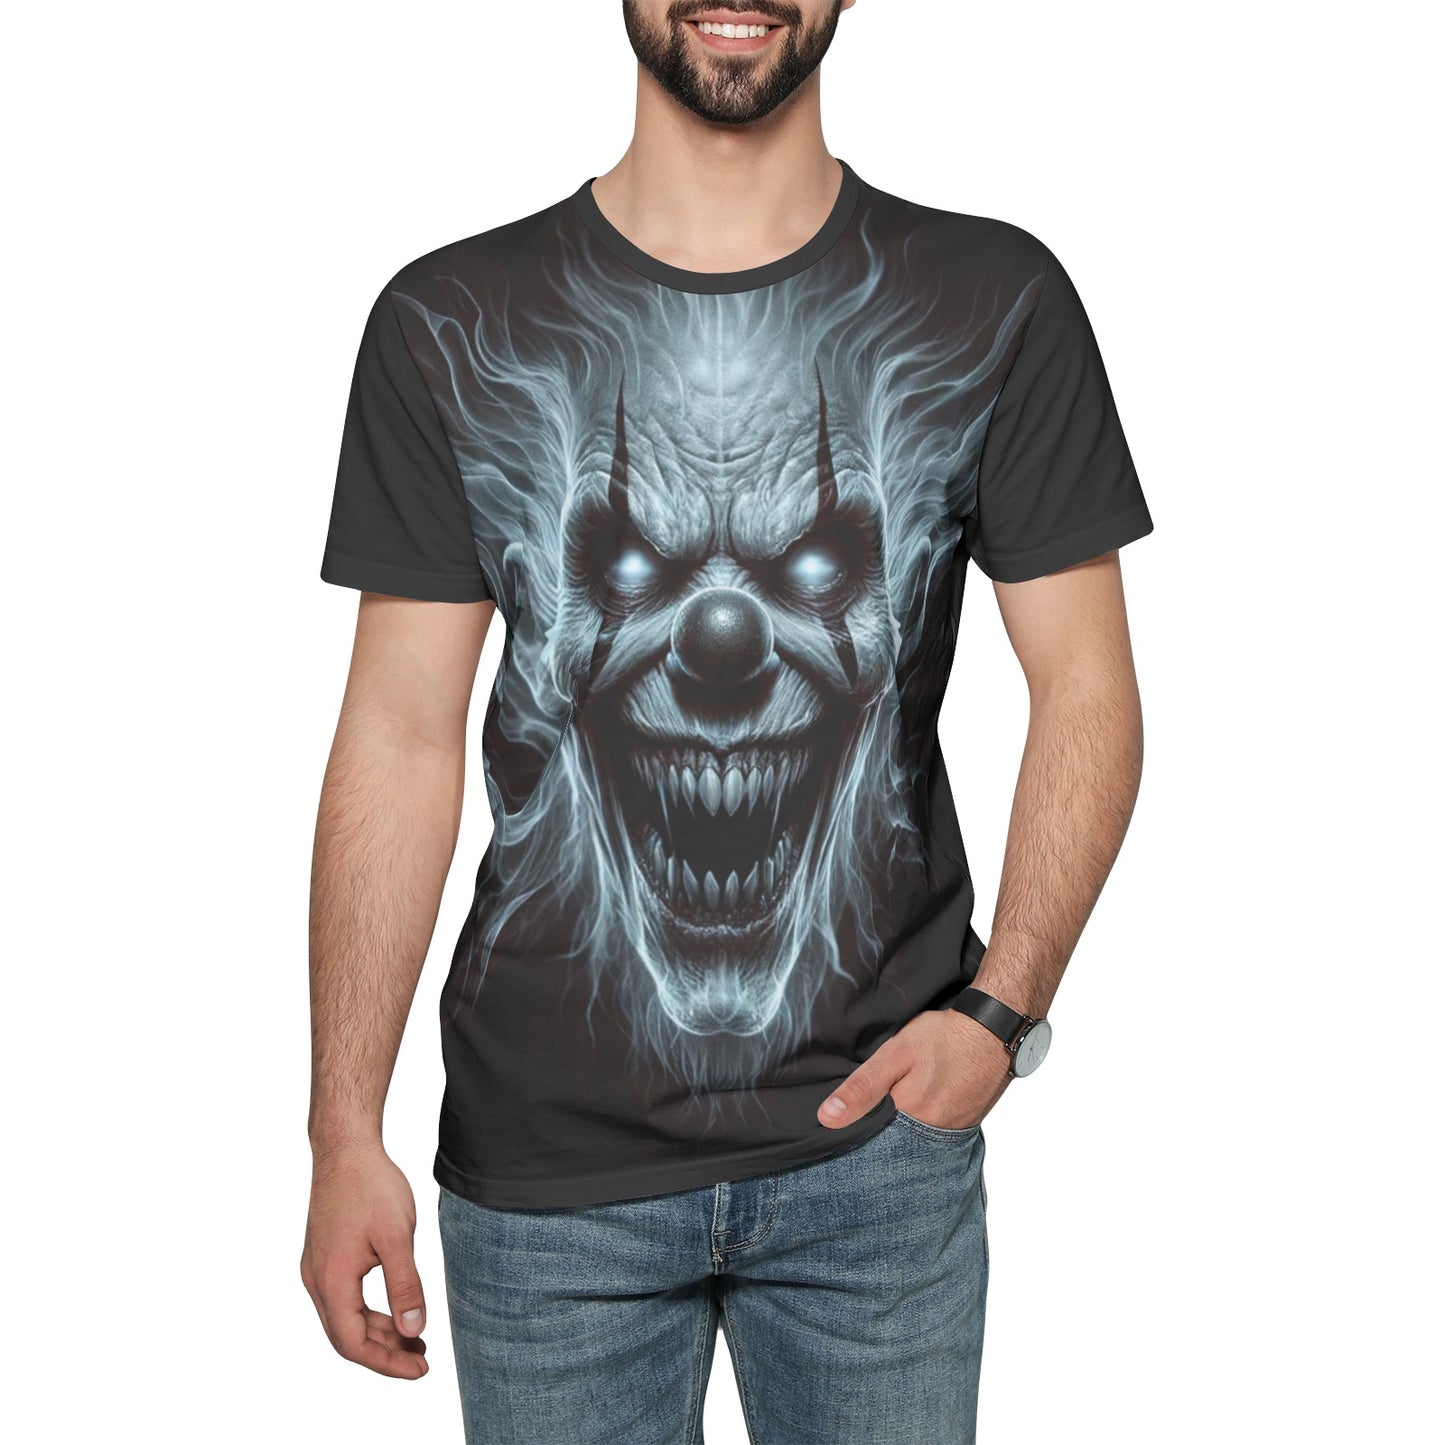 Terrifying Clown Tee - Unisex Cotton T-Shirt with Spectral Clown Print